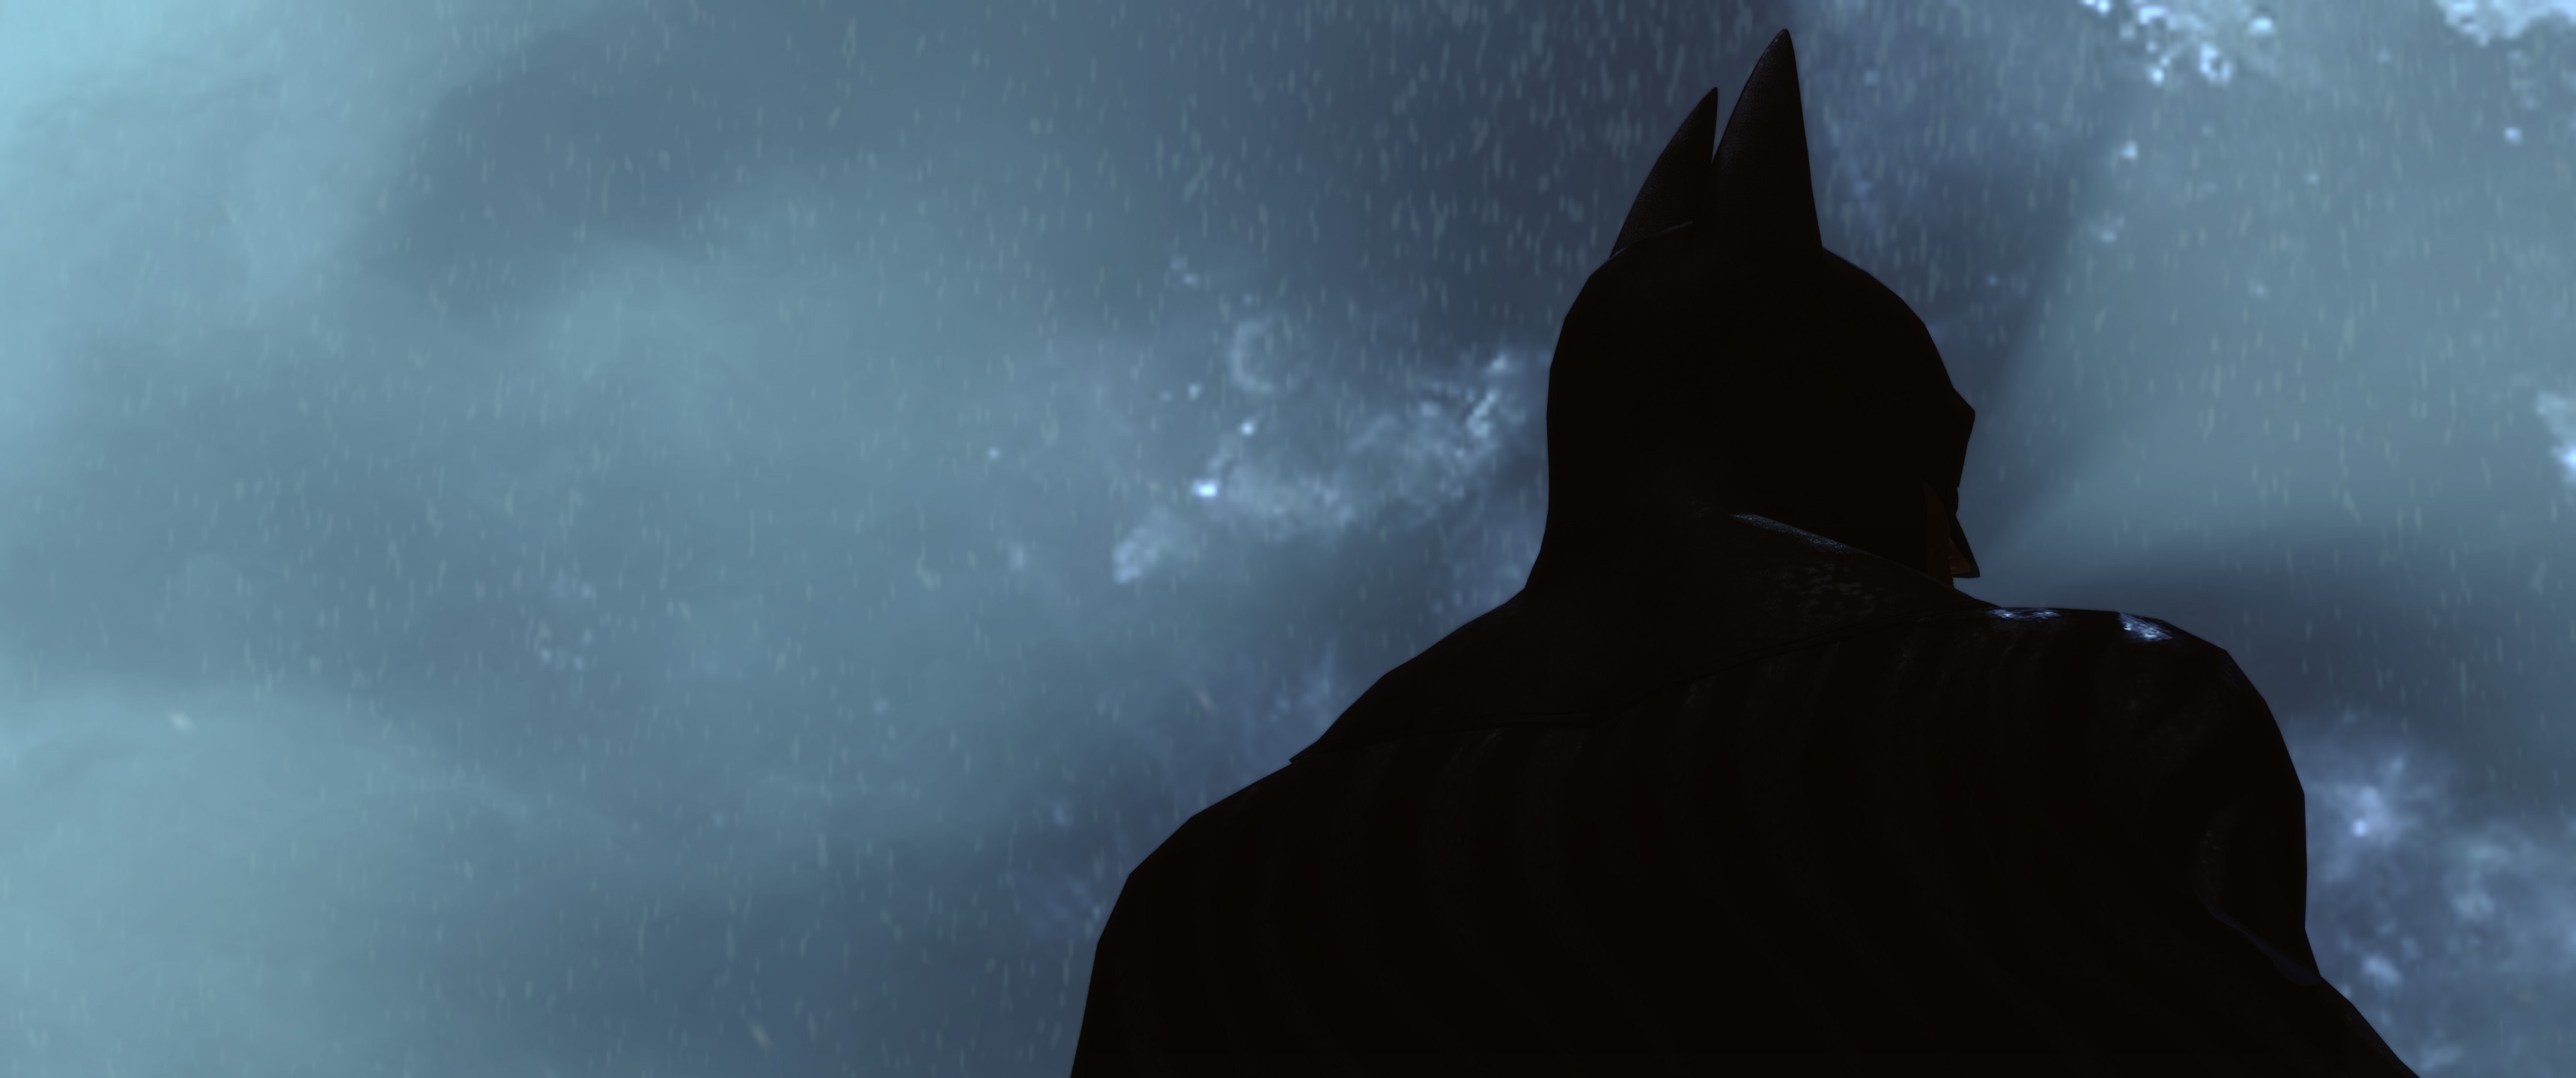 Batman, Batman: Arkham Knight Wallpaper